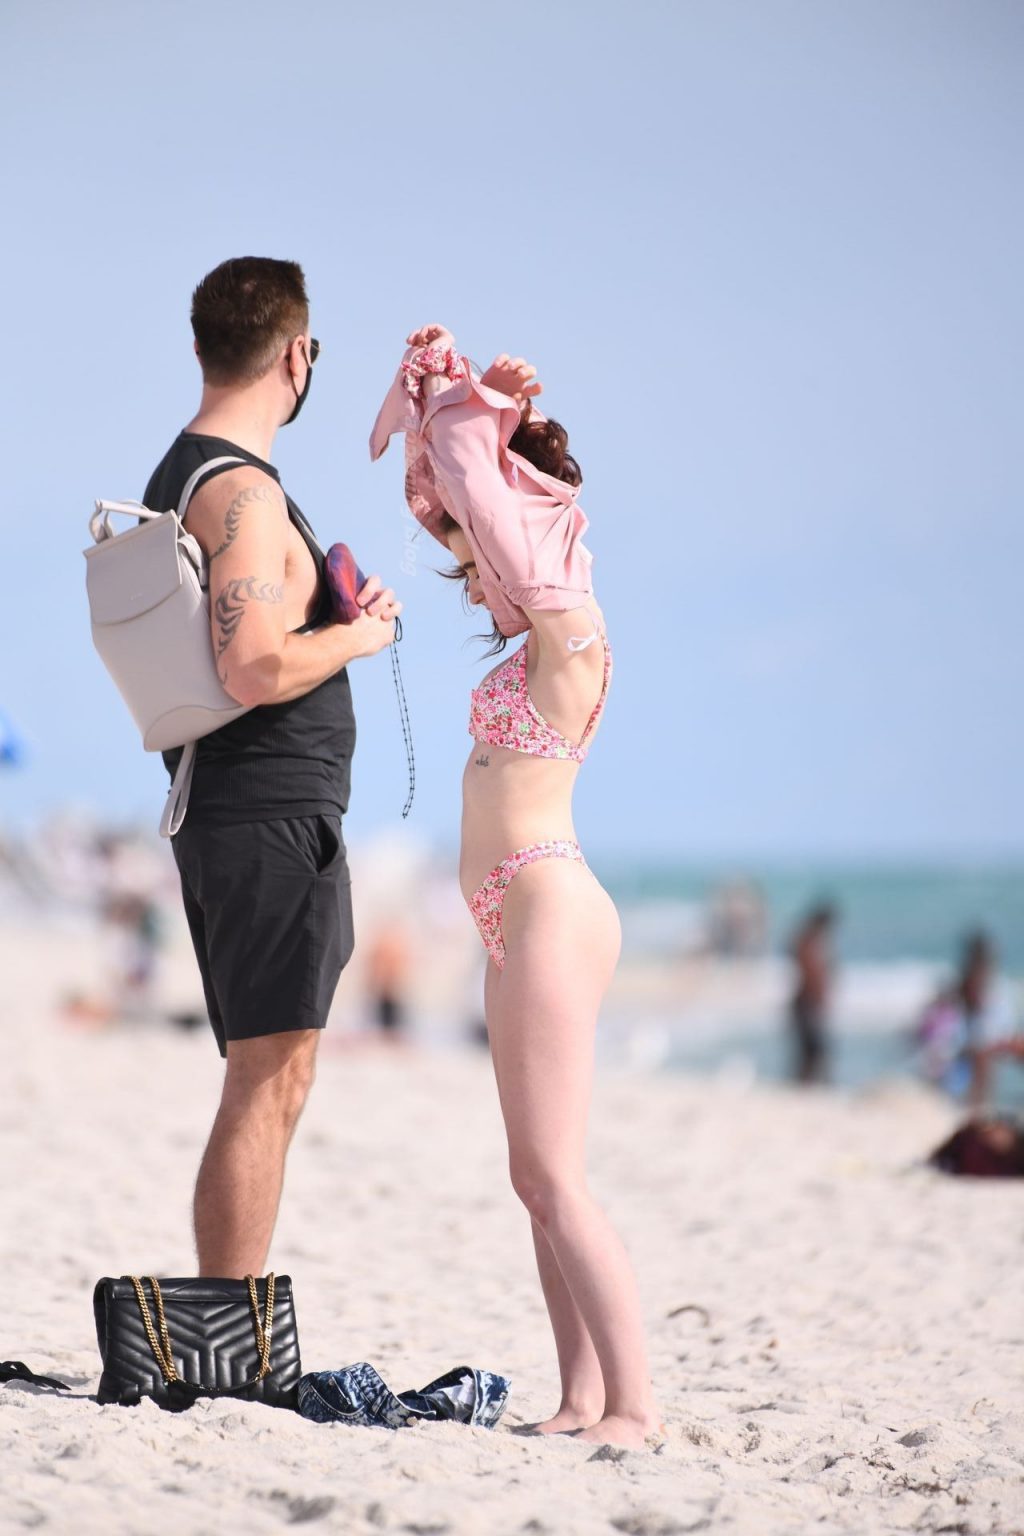 Urszula Makowska Displays Her Sexy Bikini Body on the Beach in Miami (16 Photos)